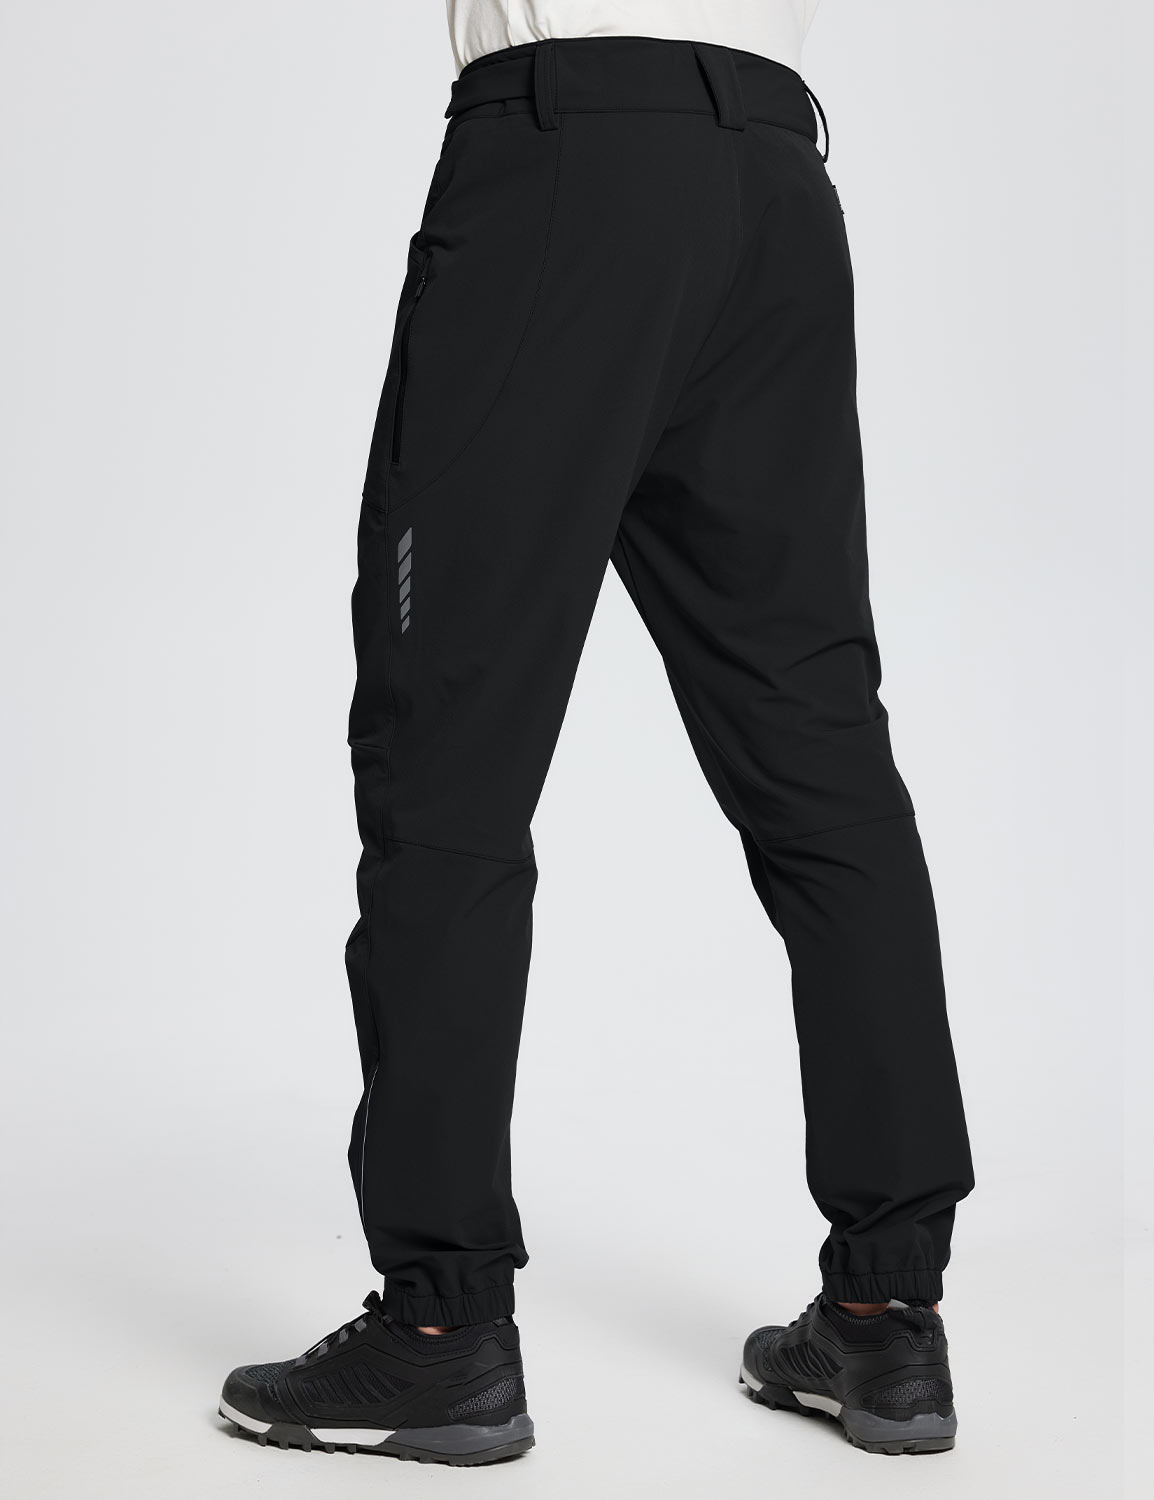 Baleaf Men's Flyleaf Water-Resistant Pocketed Cycling Pants dai039 Anthracite Back